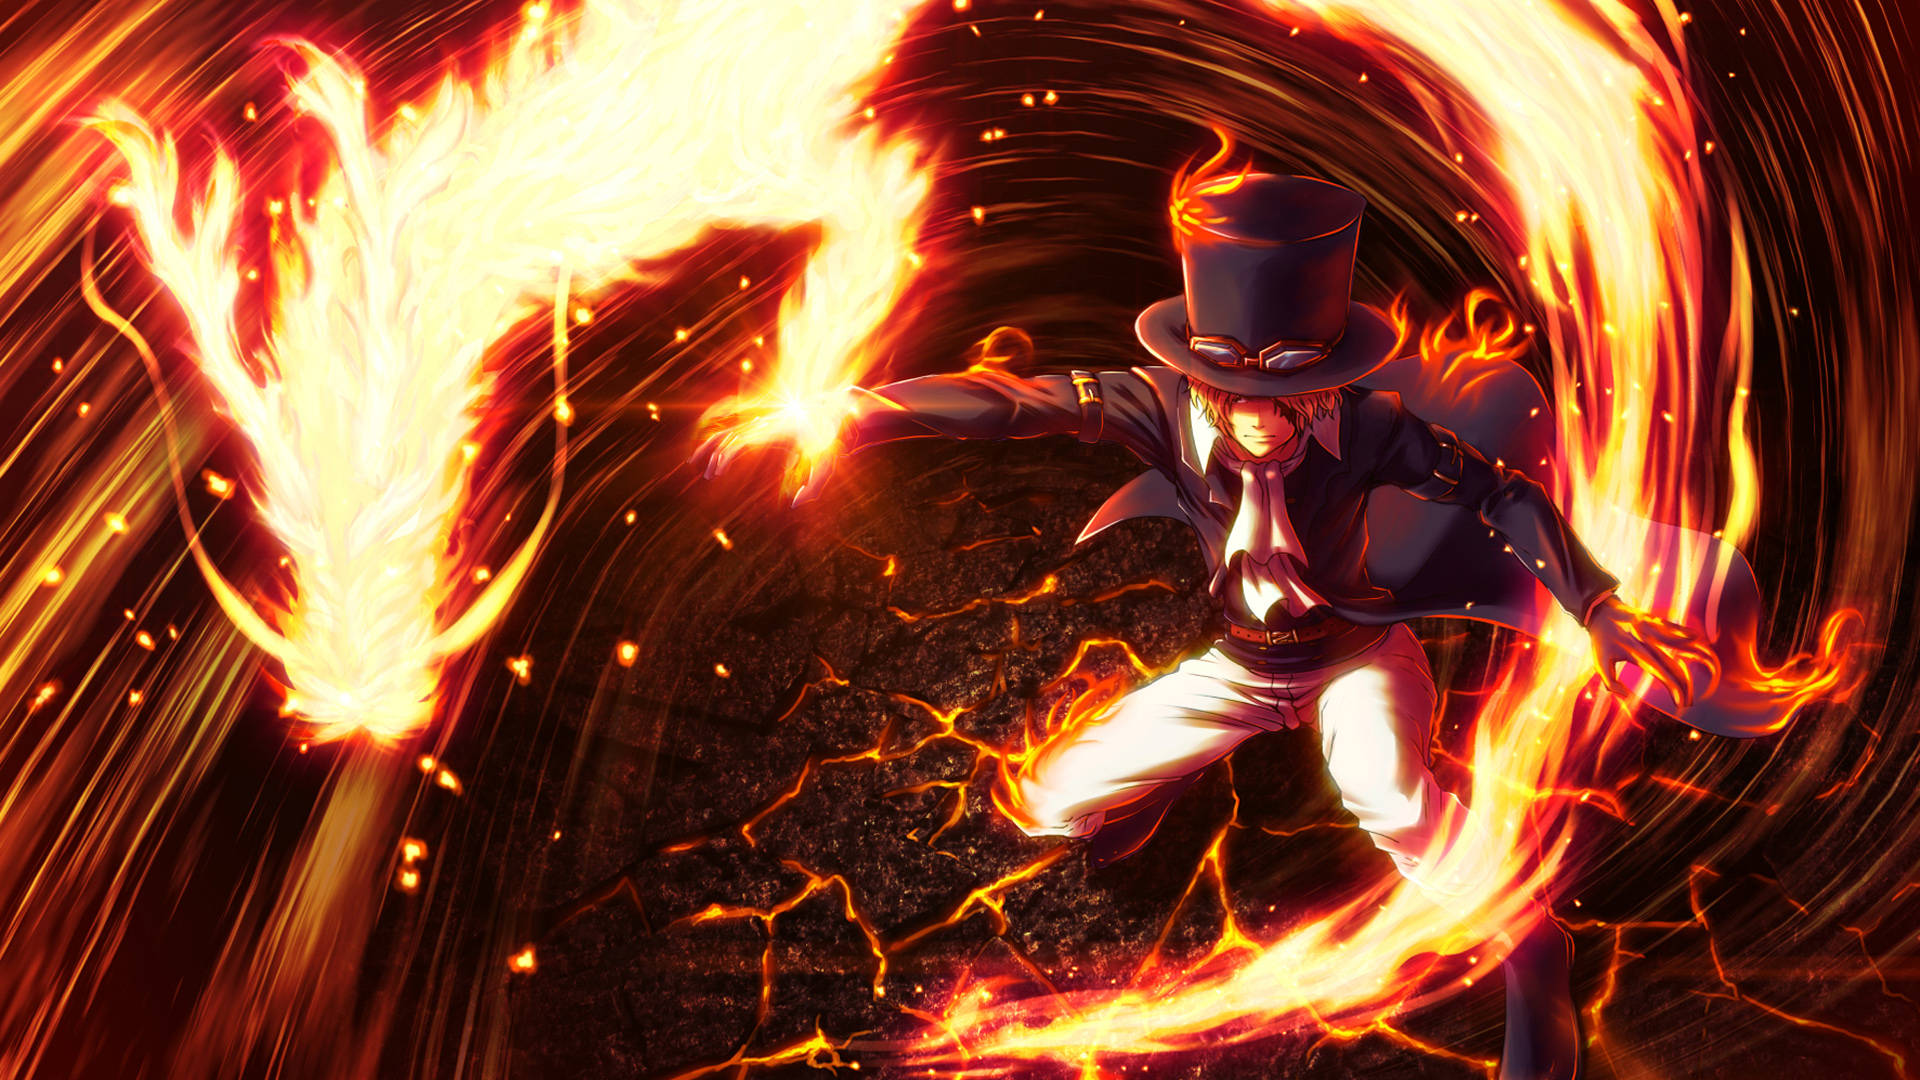 Sabo Fire Anime Background